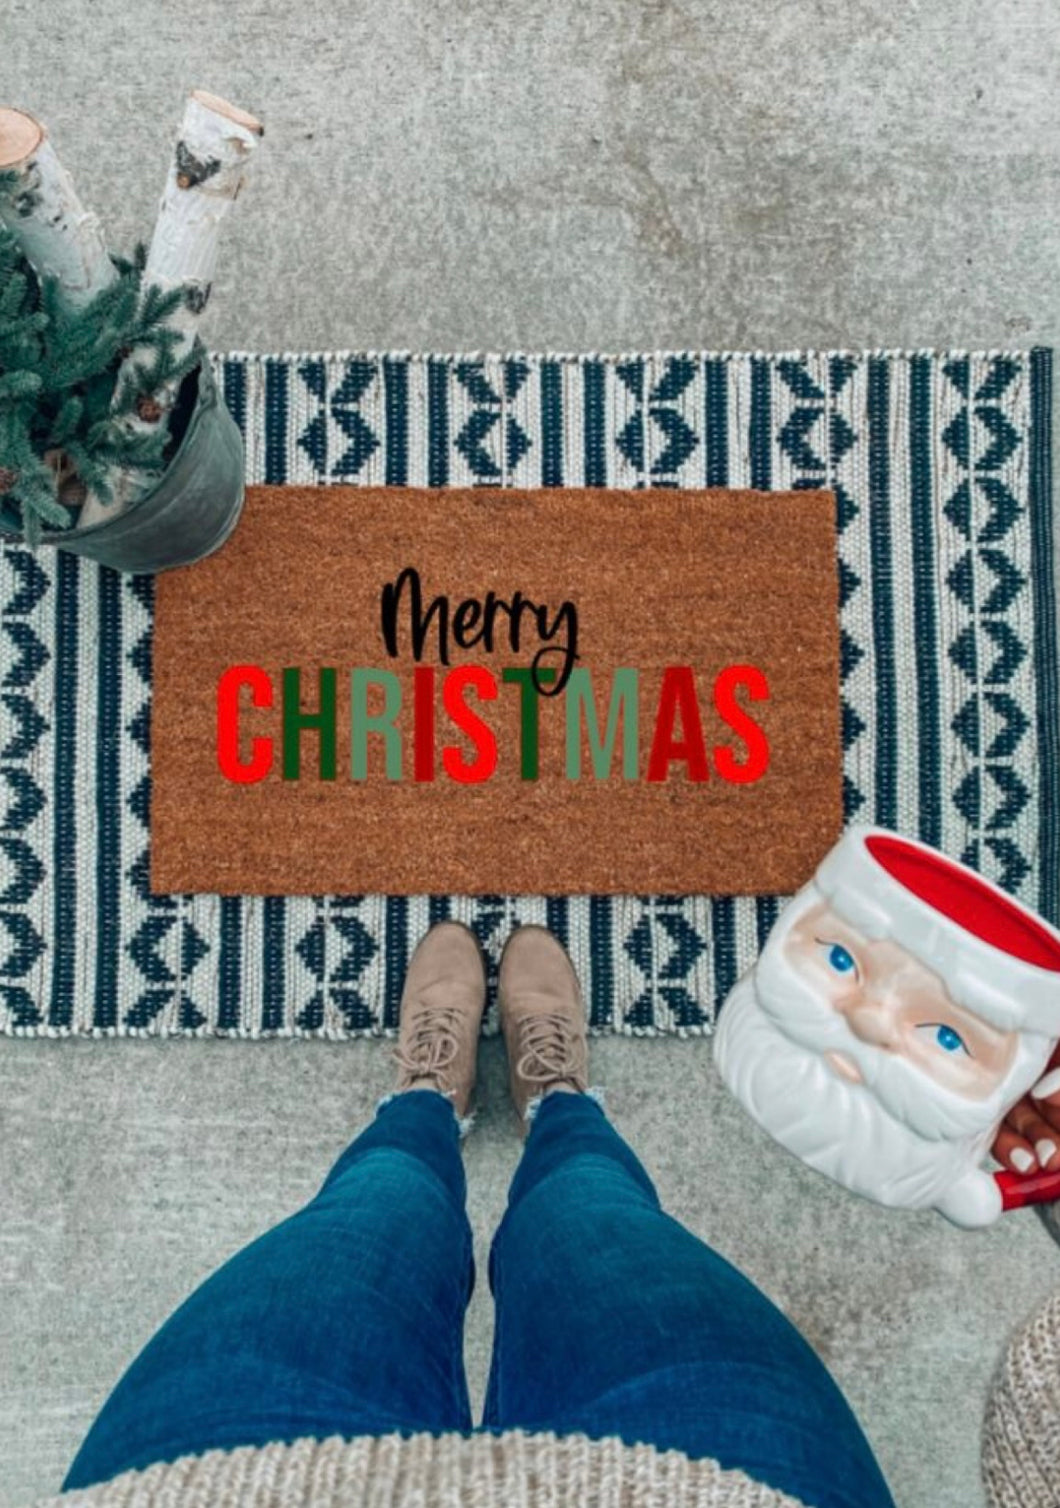 Merry Christmas Doormat DIY at home kit